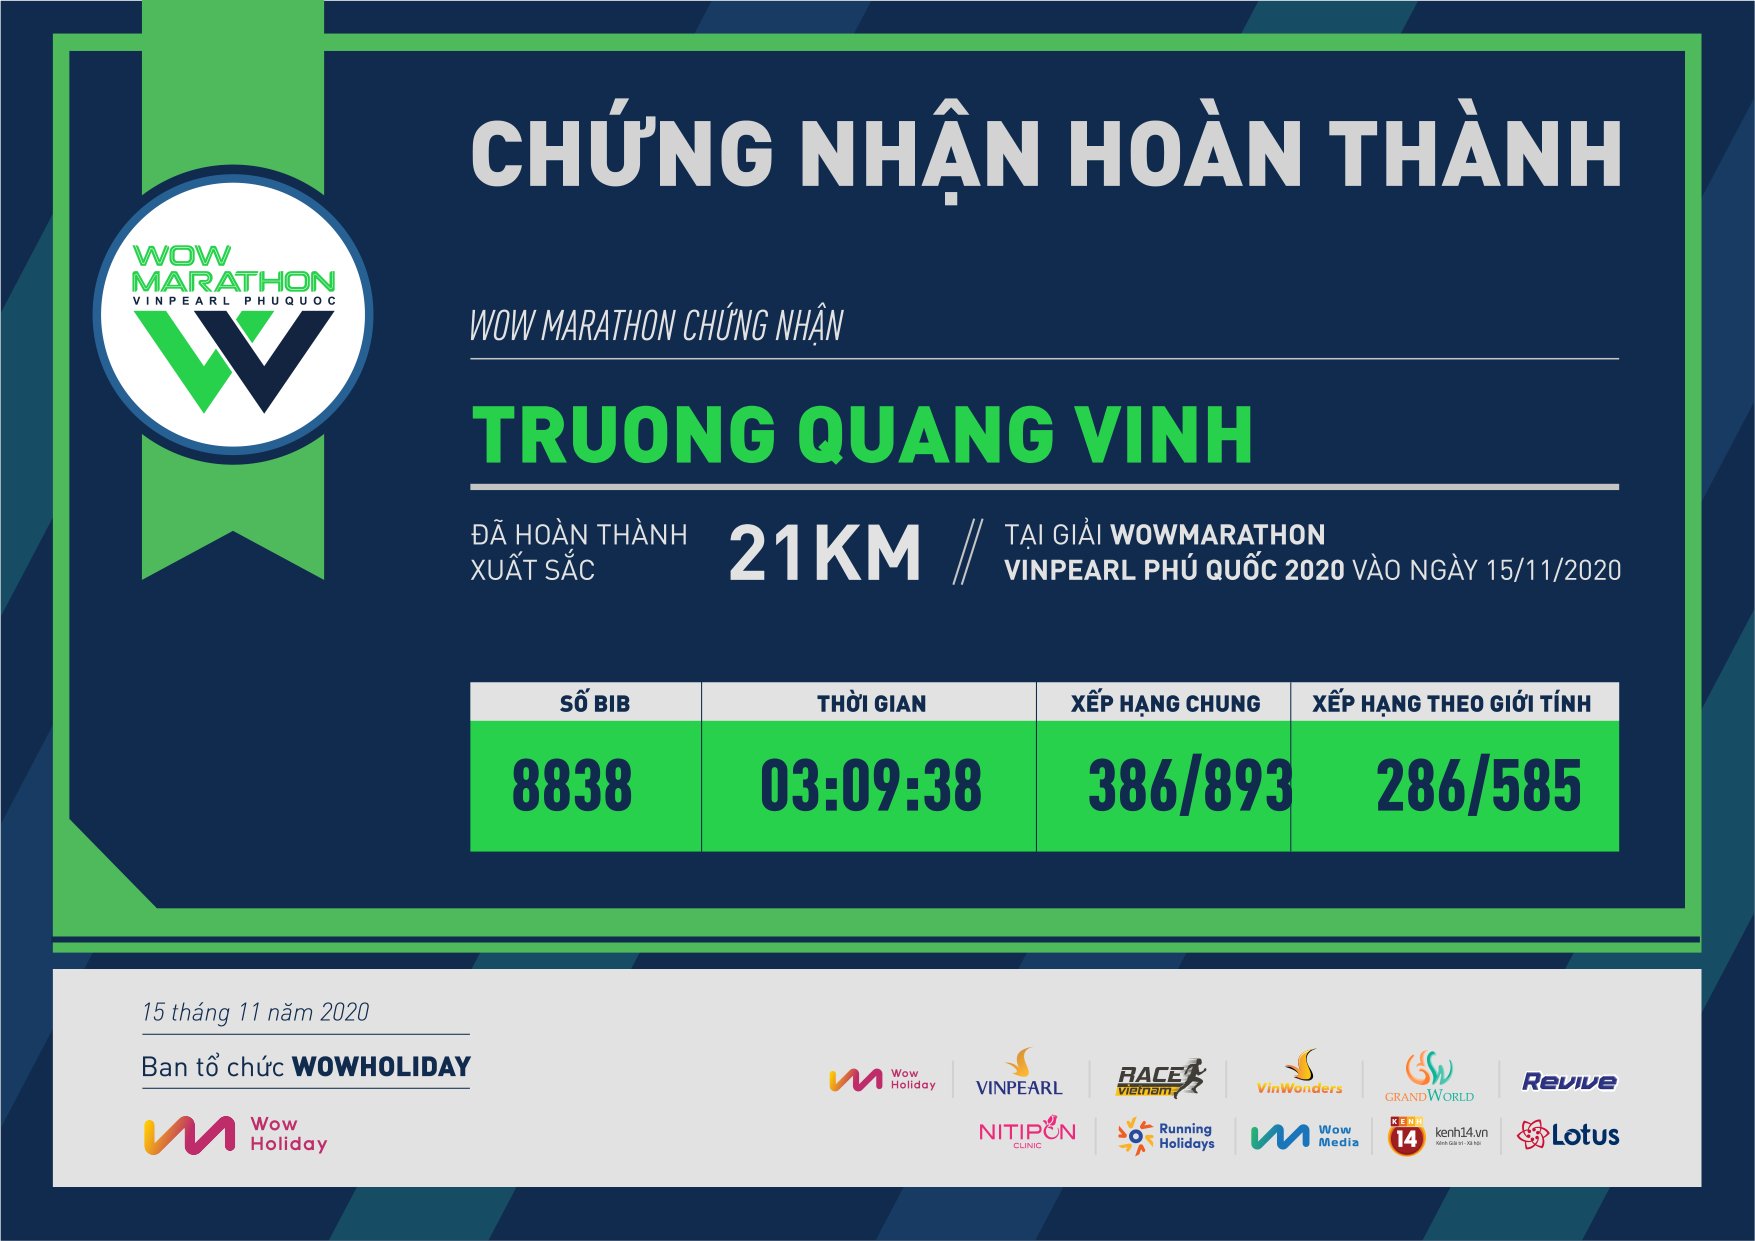 8838 - Truong Quang Vinh